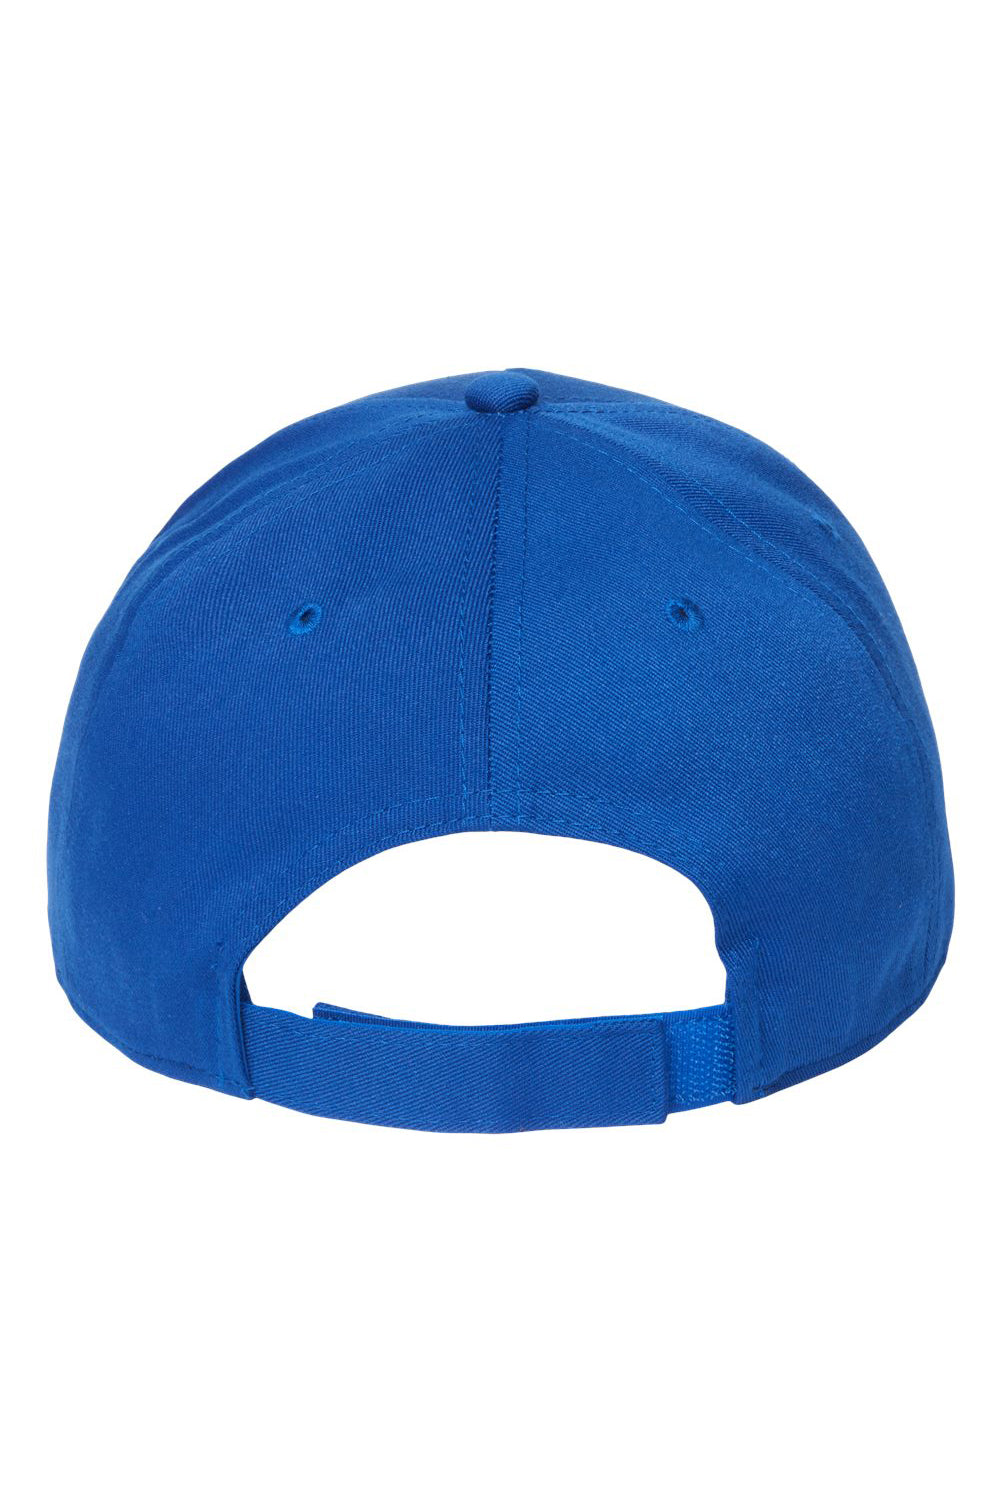 Atlantis Headwear FIJI Mens Sustainable Adjustable Hat Royal Blue Flat Back